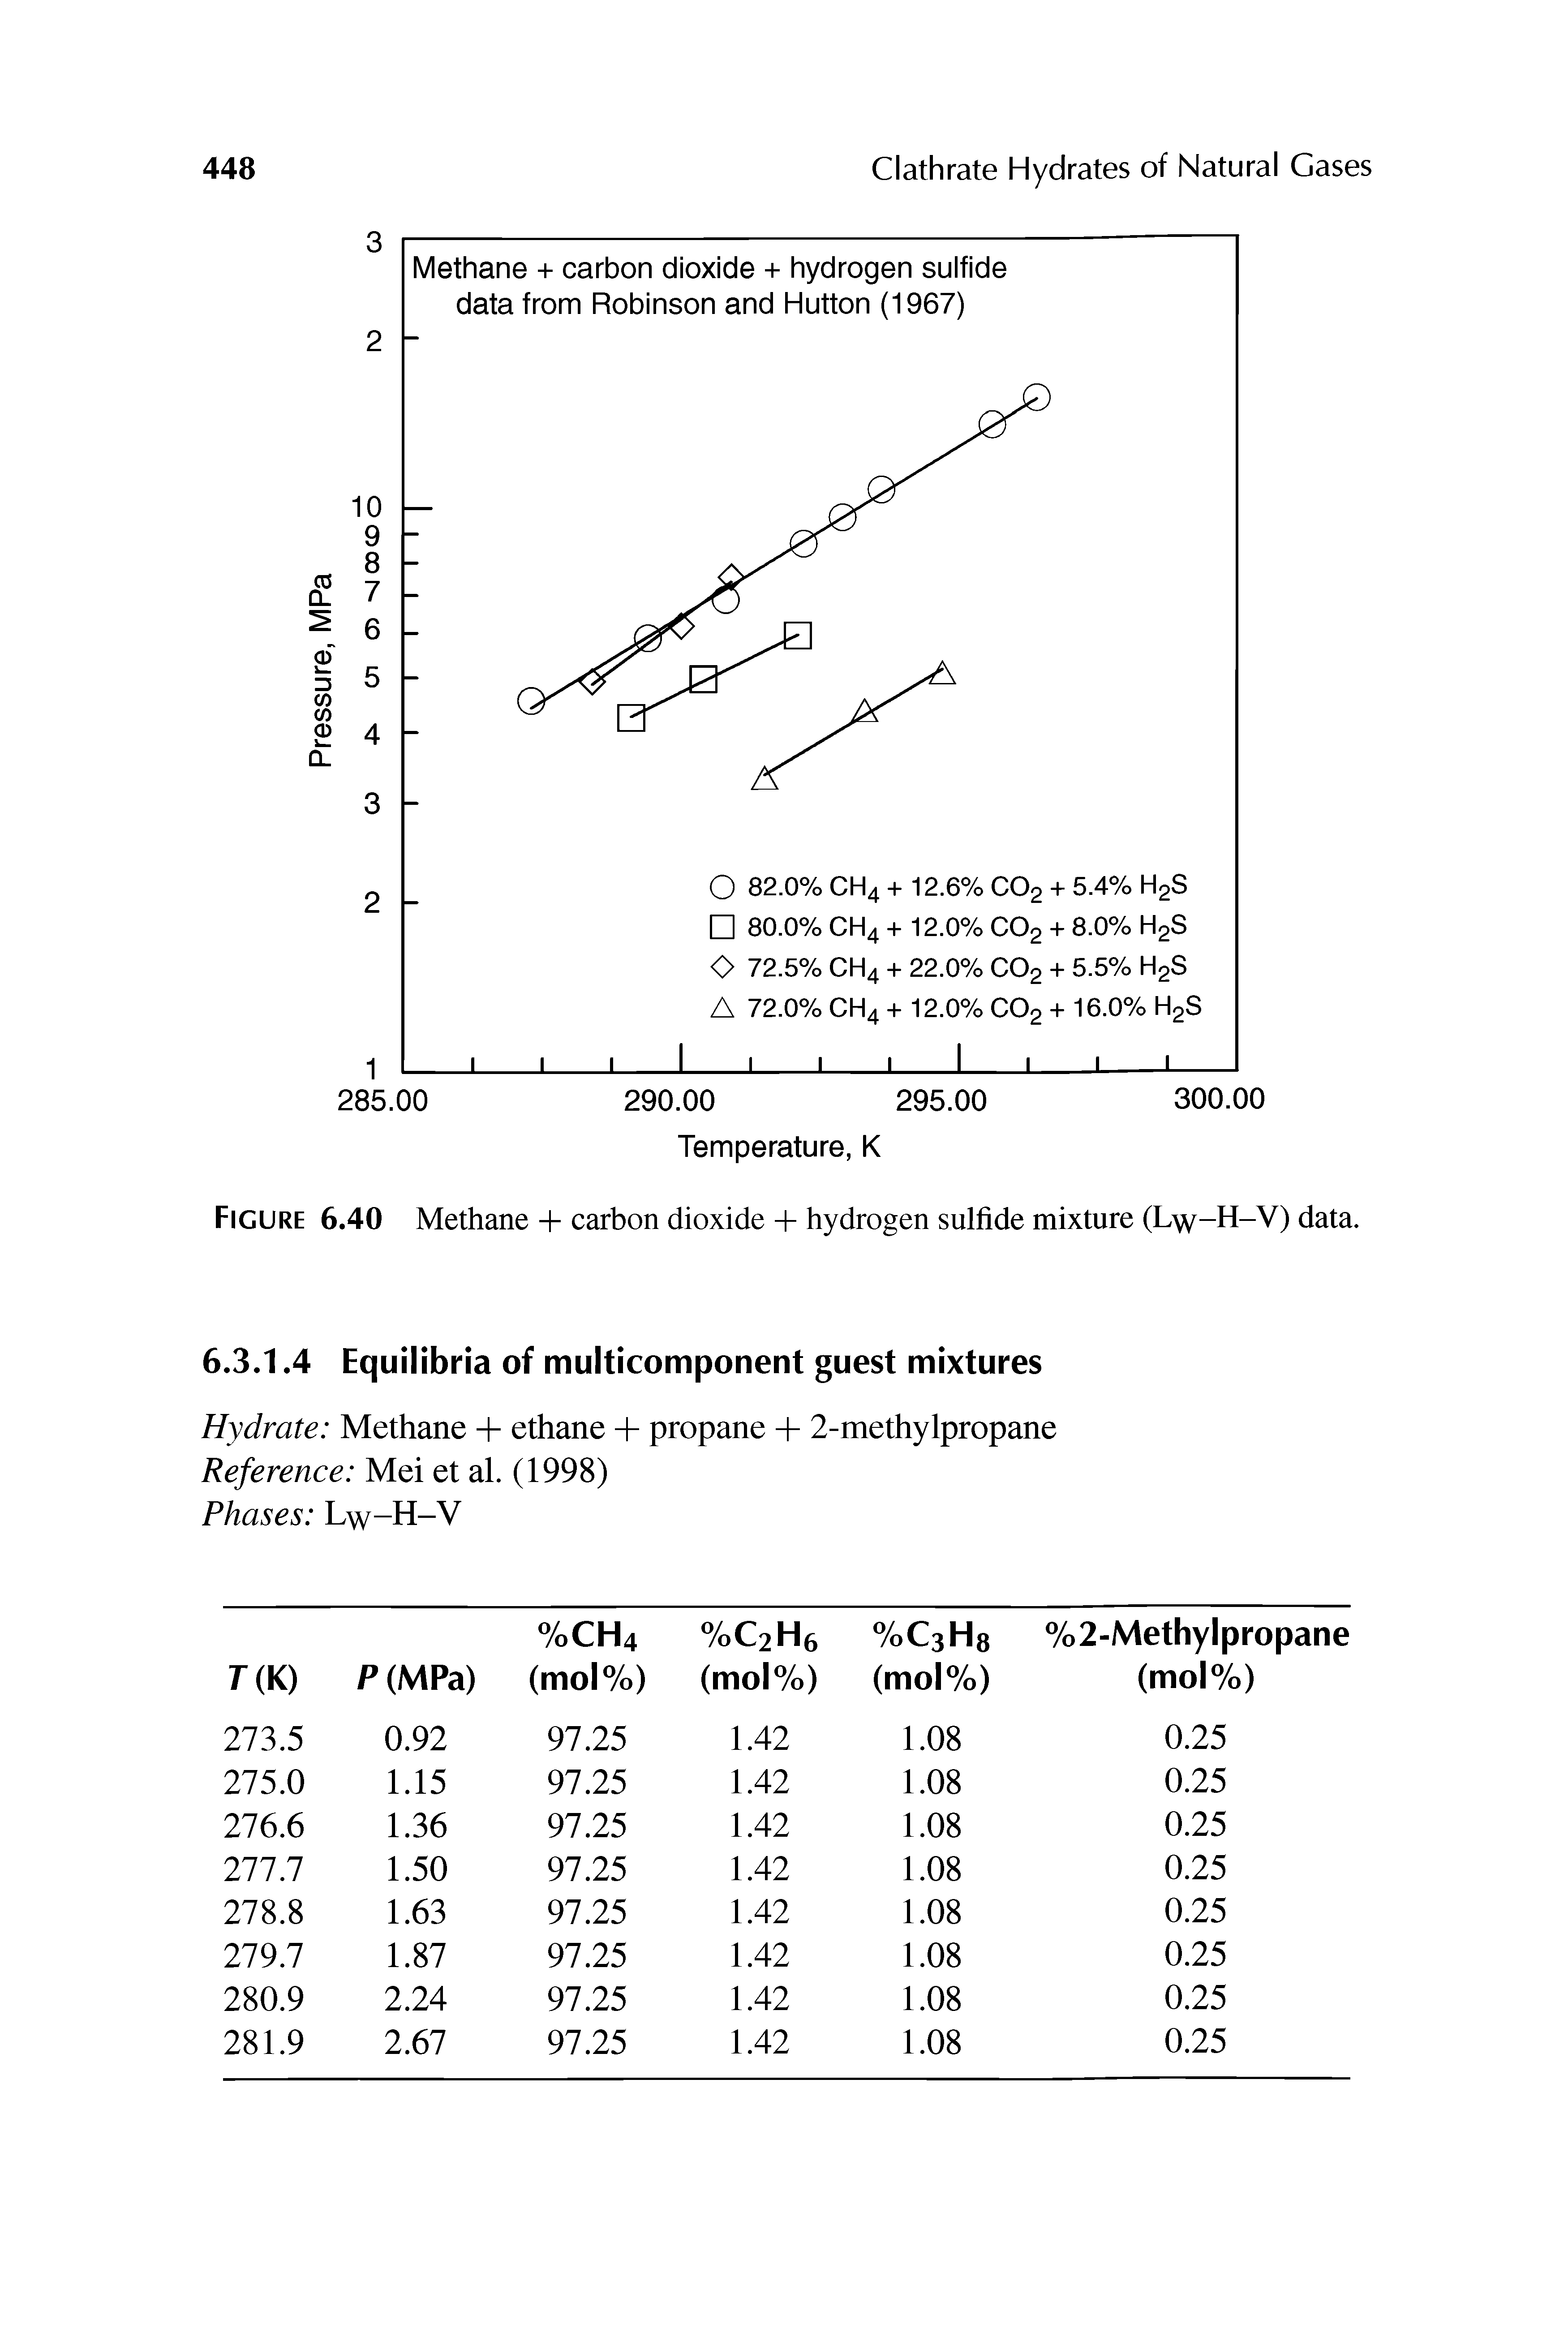 Figure 6.40 Methane + carbon dioxide + hydrogen sulfide mixture (Lyy-H-V) data.